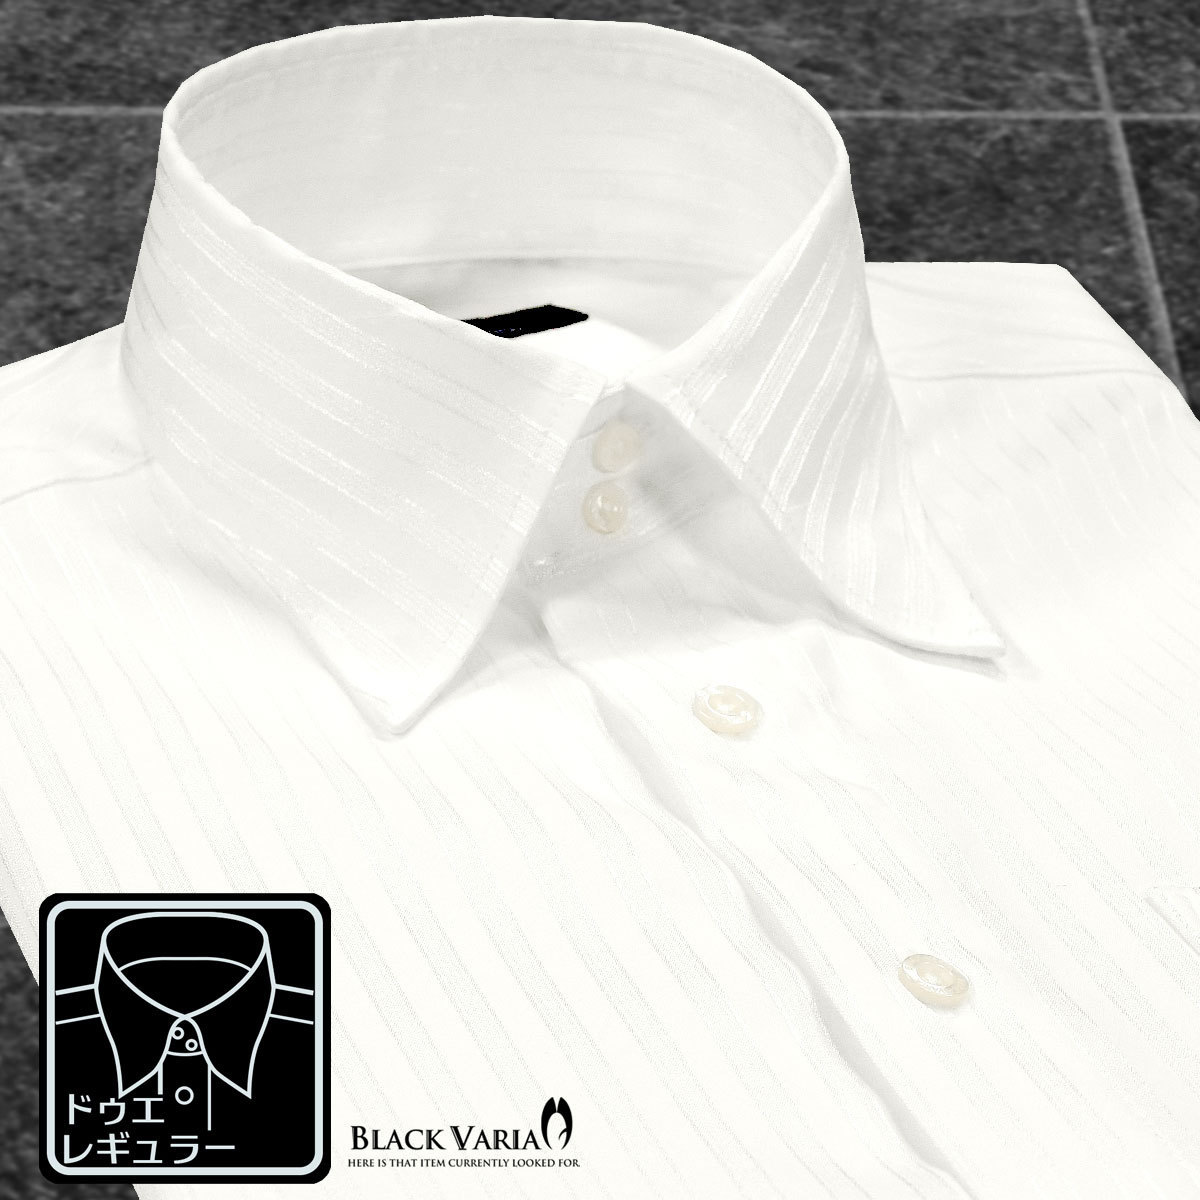 a191850-wh BLACK VARIA ドゥエボットーニ ストライプ柄 ジャガード織柄[レギュラーカラー]サテンシャツ メンズ(ホワイト白) L 披露宴_レギュラーカラー